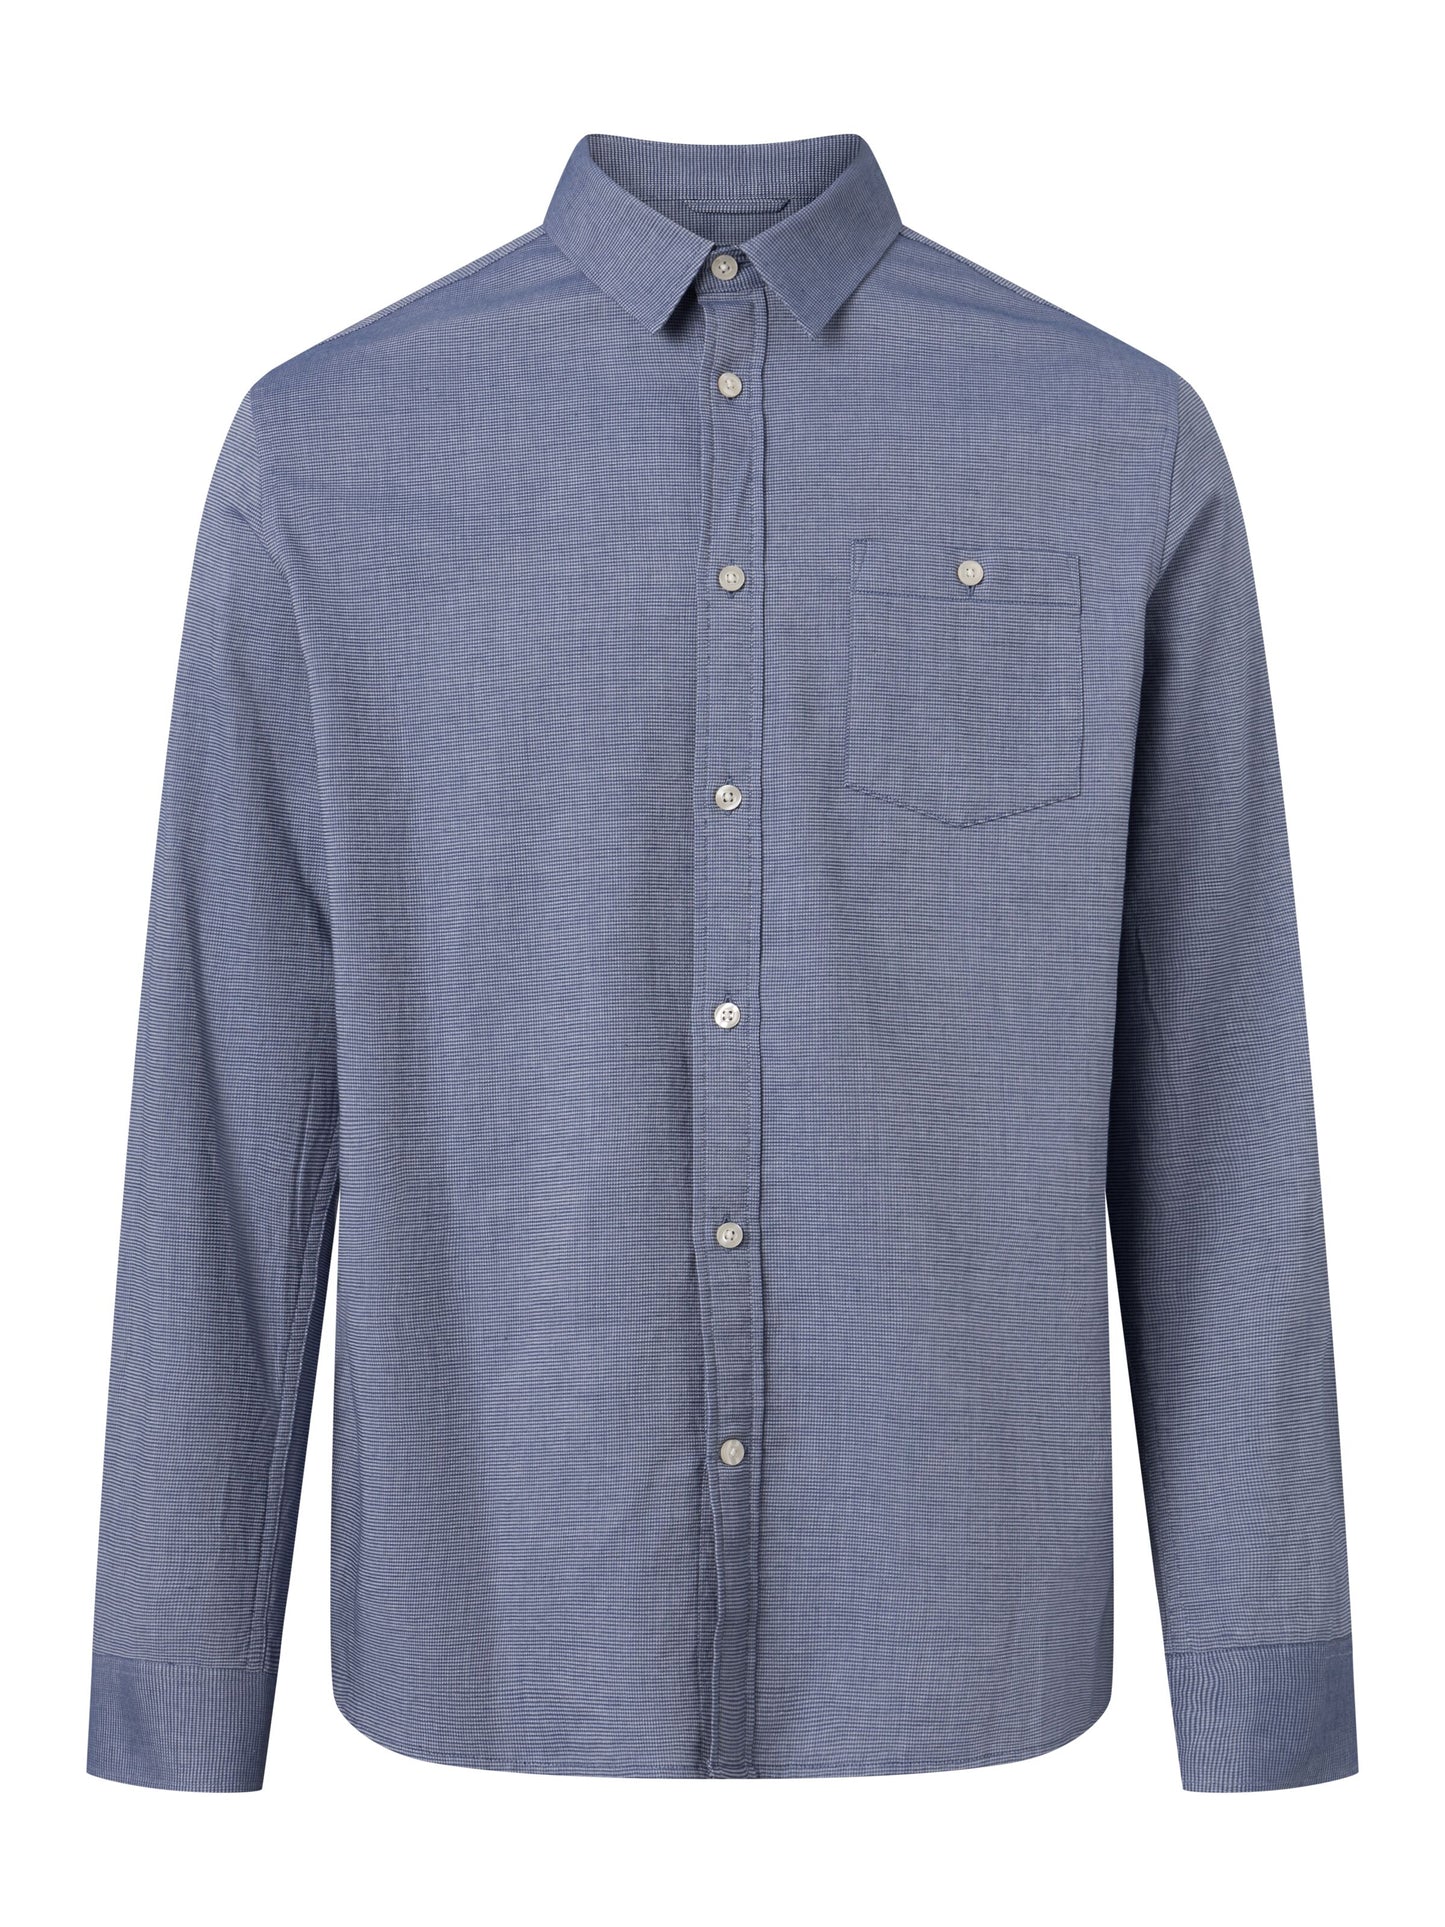 Hemd pepita checkered shirt - Blue check - KnowledgeCotton